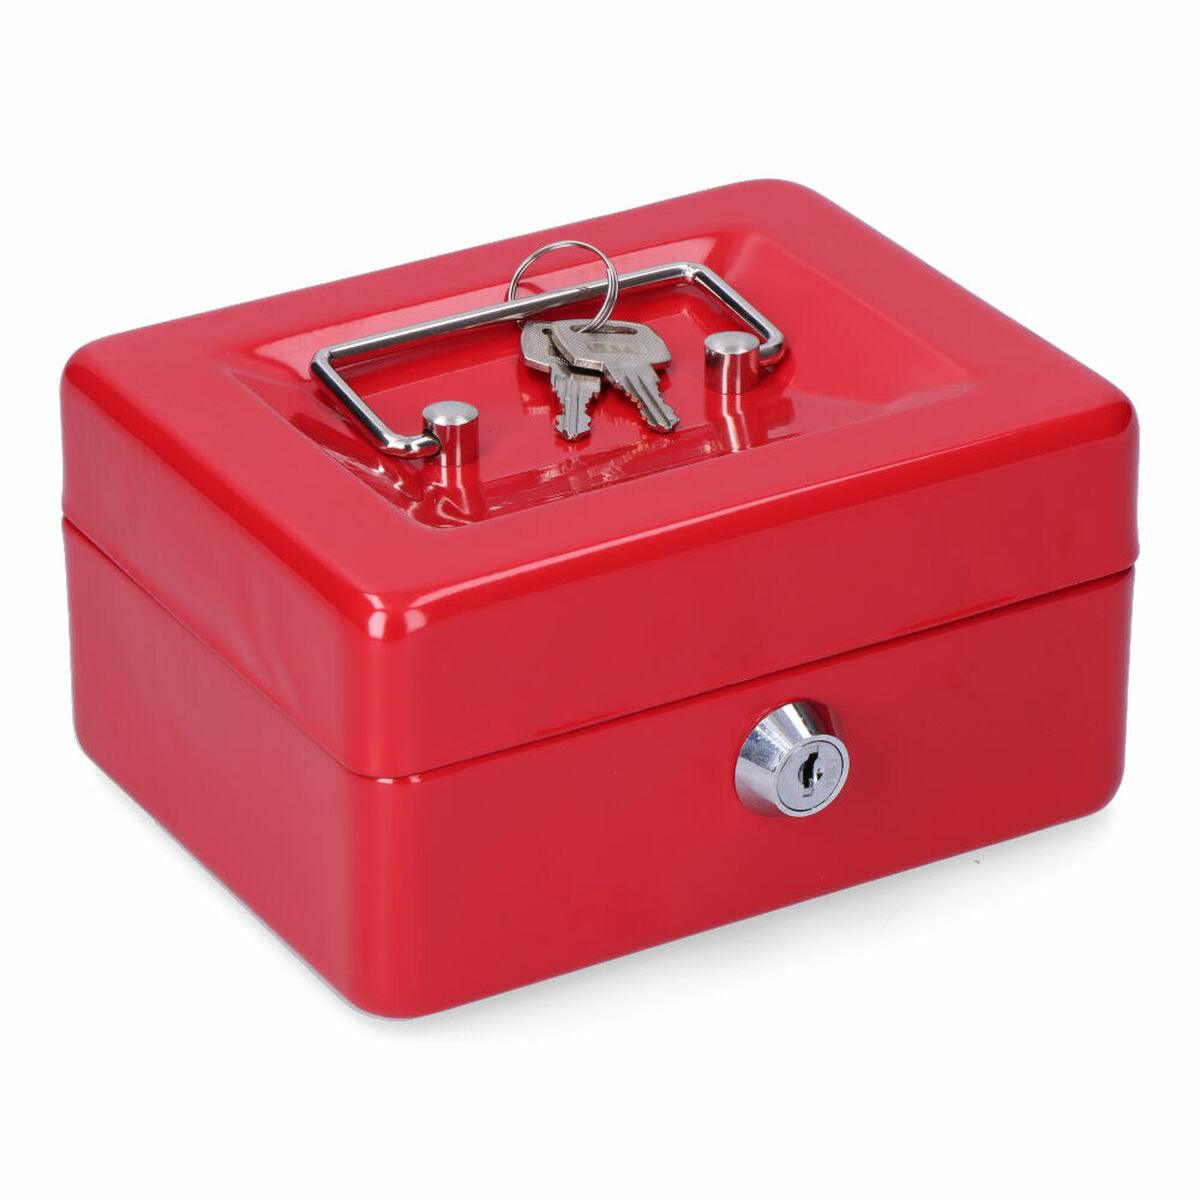 Safe-deposit box Micel CFC09 M13392 15,2 x 11,8 x 8 cm Red Steel - Sterilamo